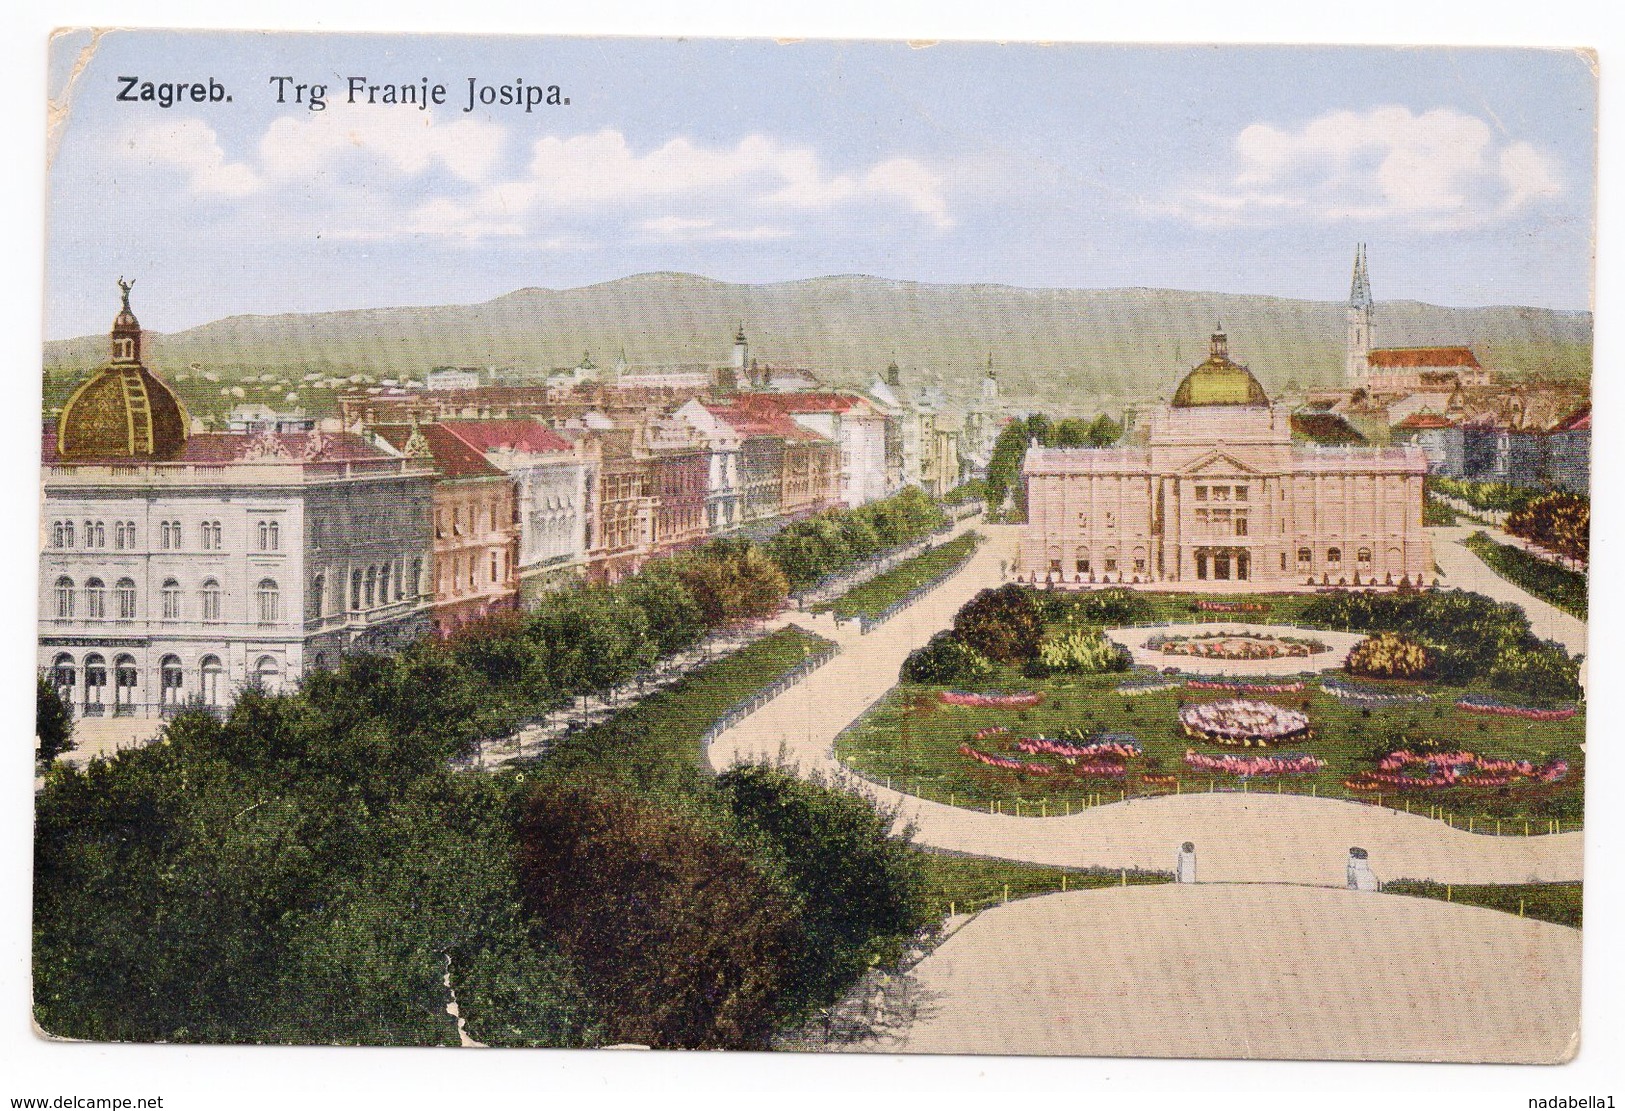 1920 YUGOSLAVIA, CROATIA, ZAGREB TO PARIS, FRANCE, BAN JELACIC SQUARE, ILLUSTRATED POSTCARD, USED - Yugoslavia